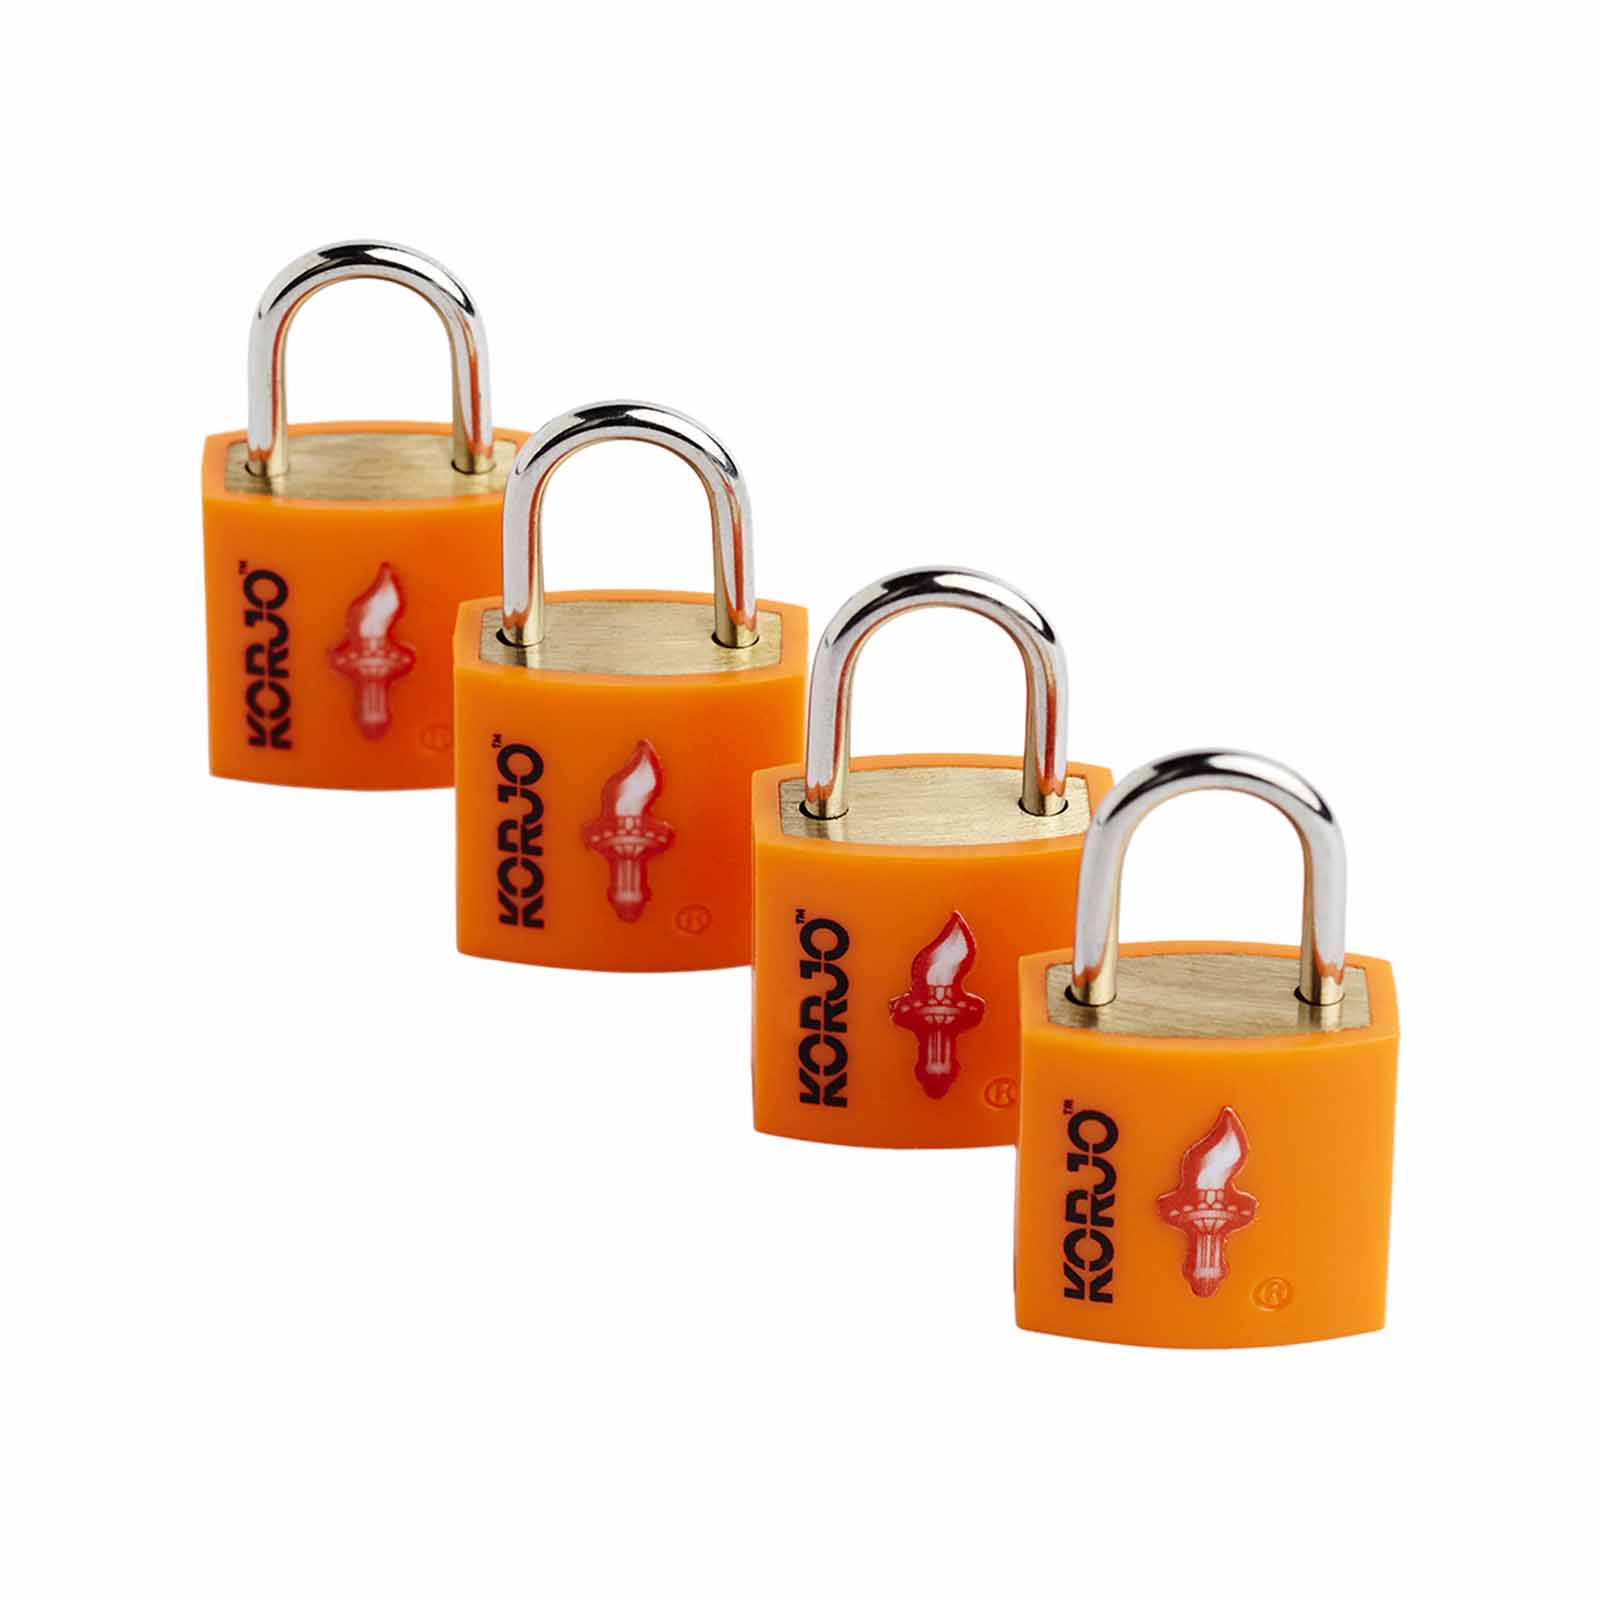 Korjo-Tsa-Keyed-Locks-Four-Pack-Orange-Angle